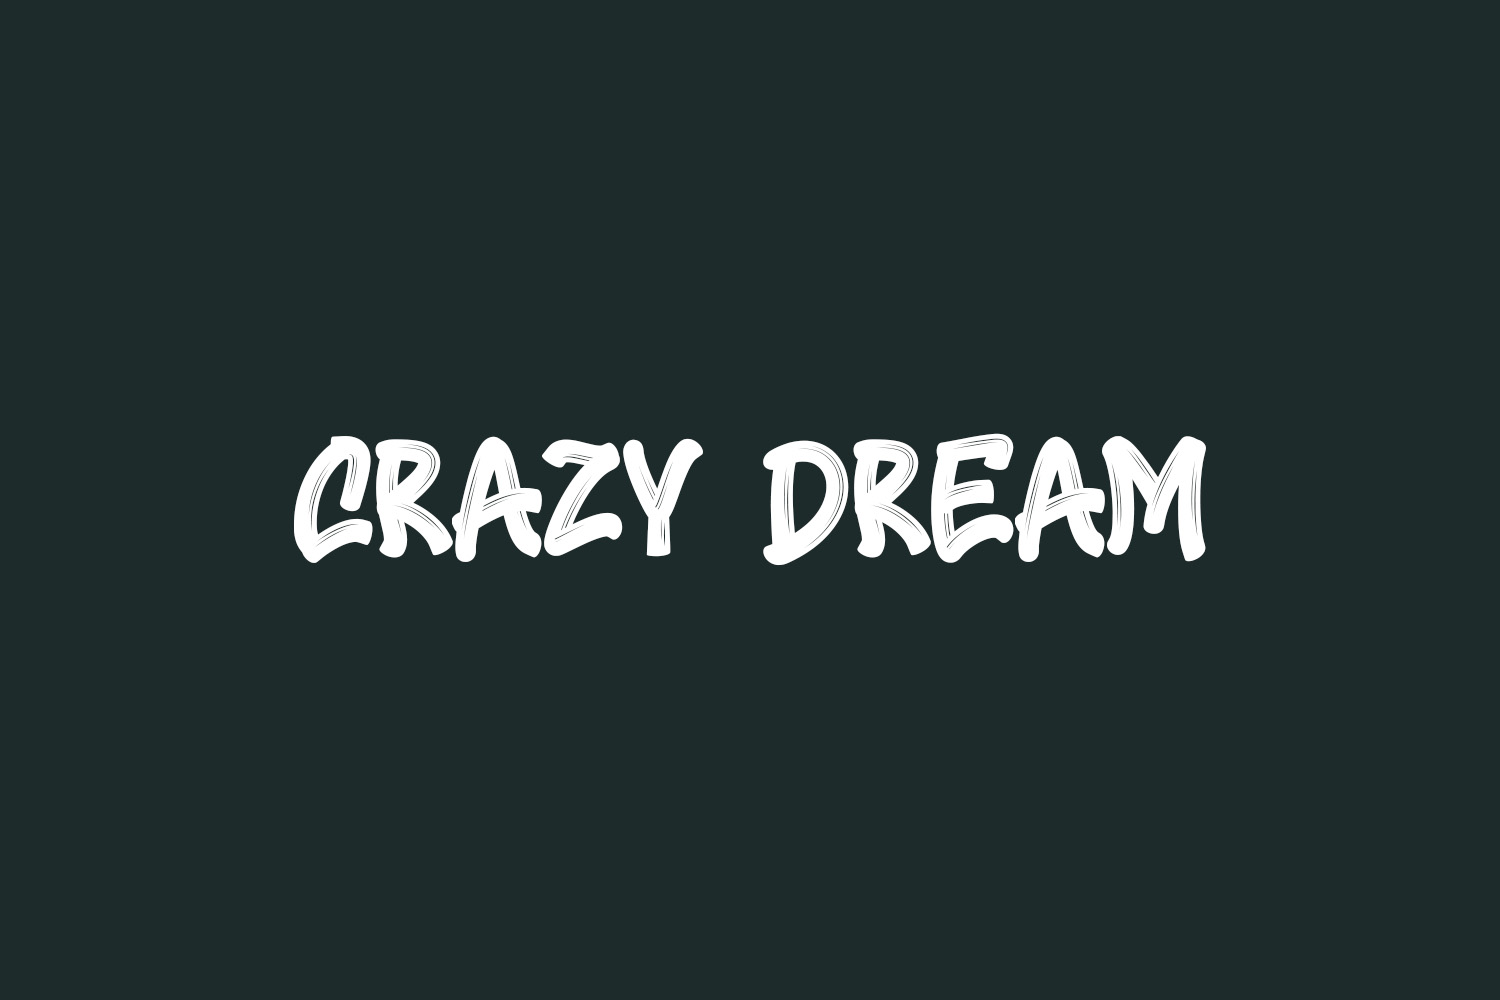 Crazy Dream Free Font